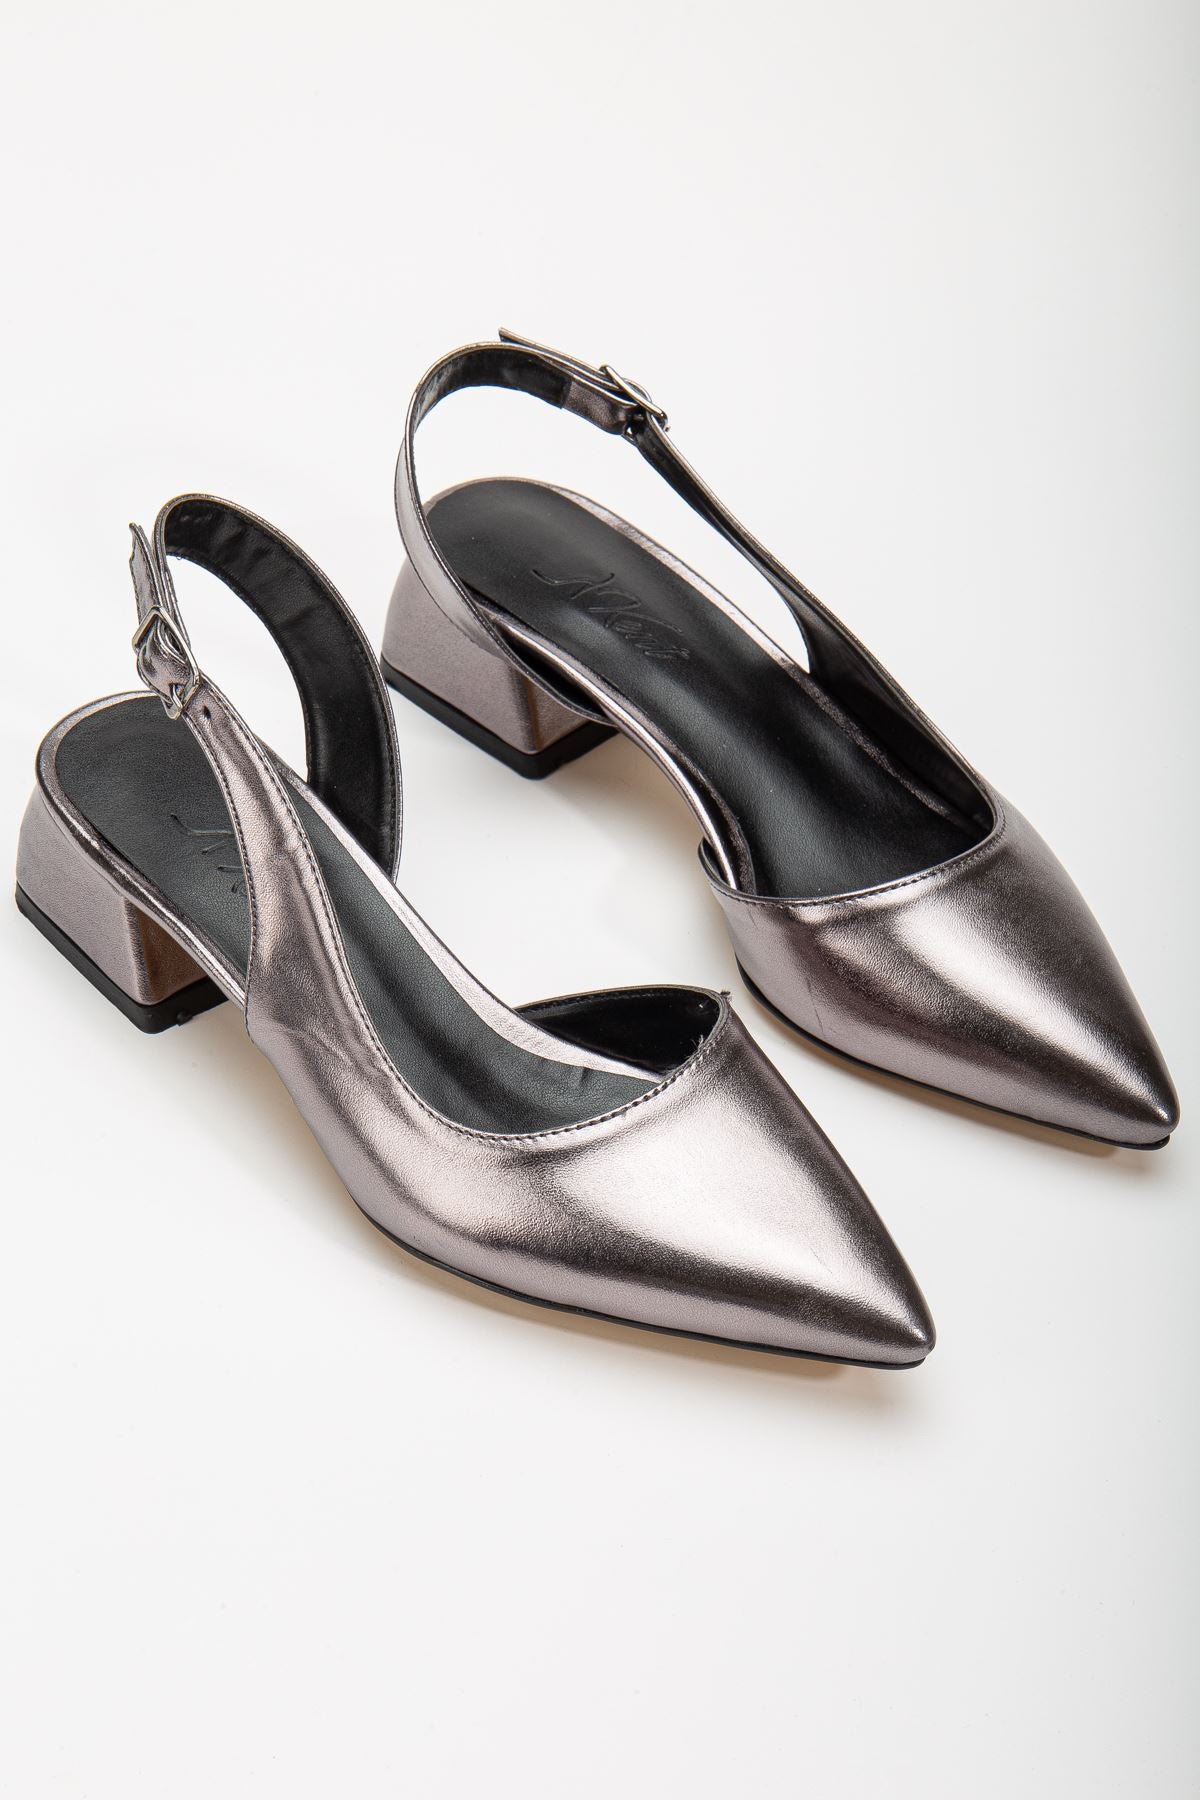 Kadin Ossie Platinum Skin Women's High Heels Shoes - STREETMODE™